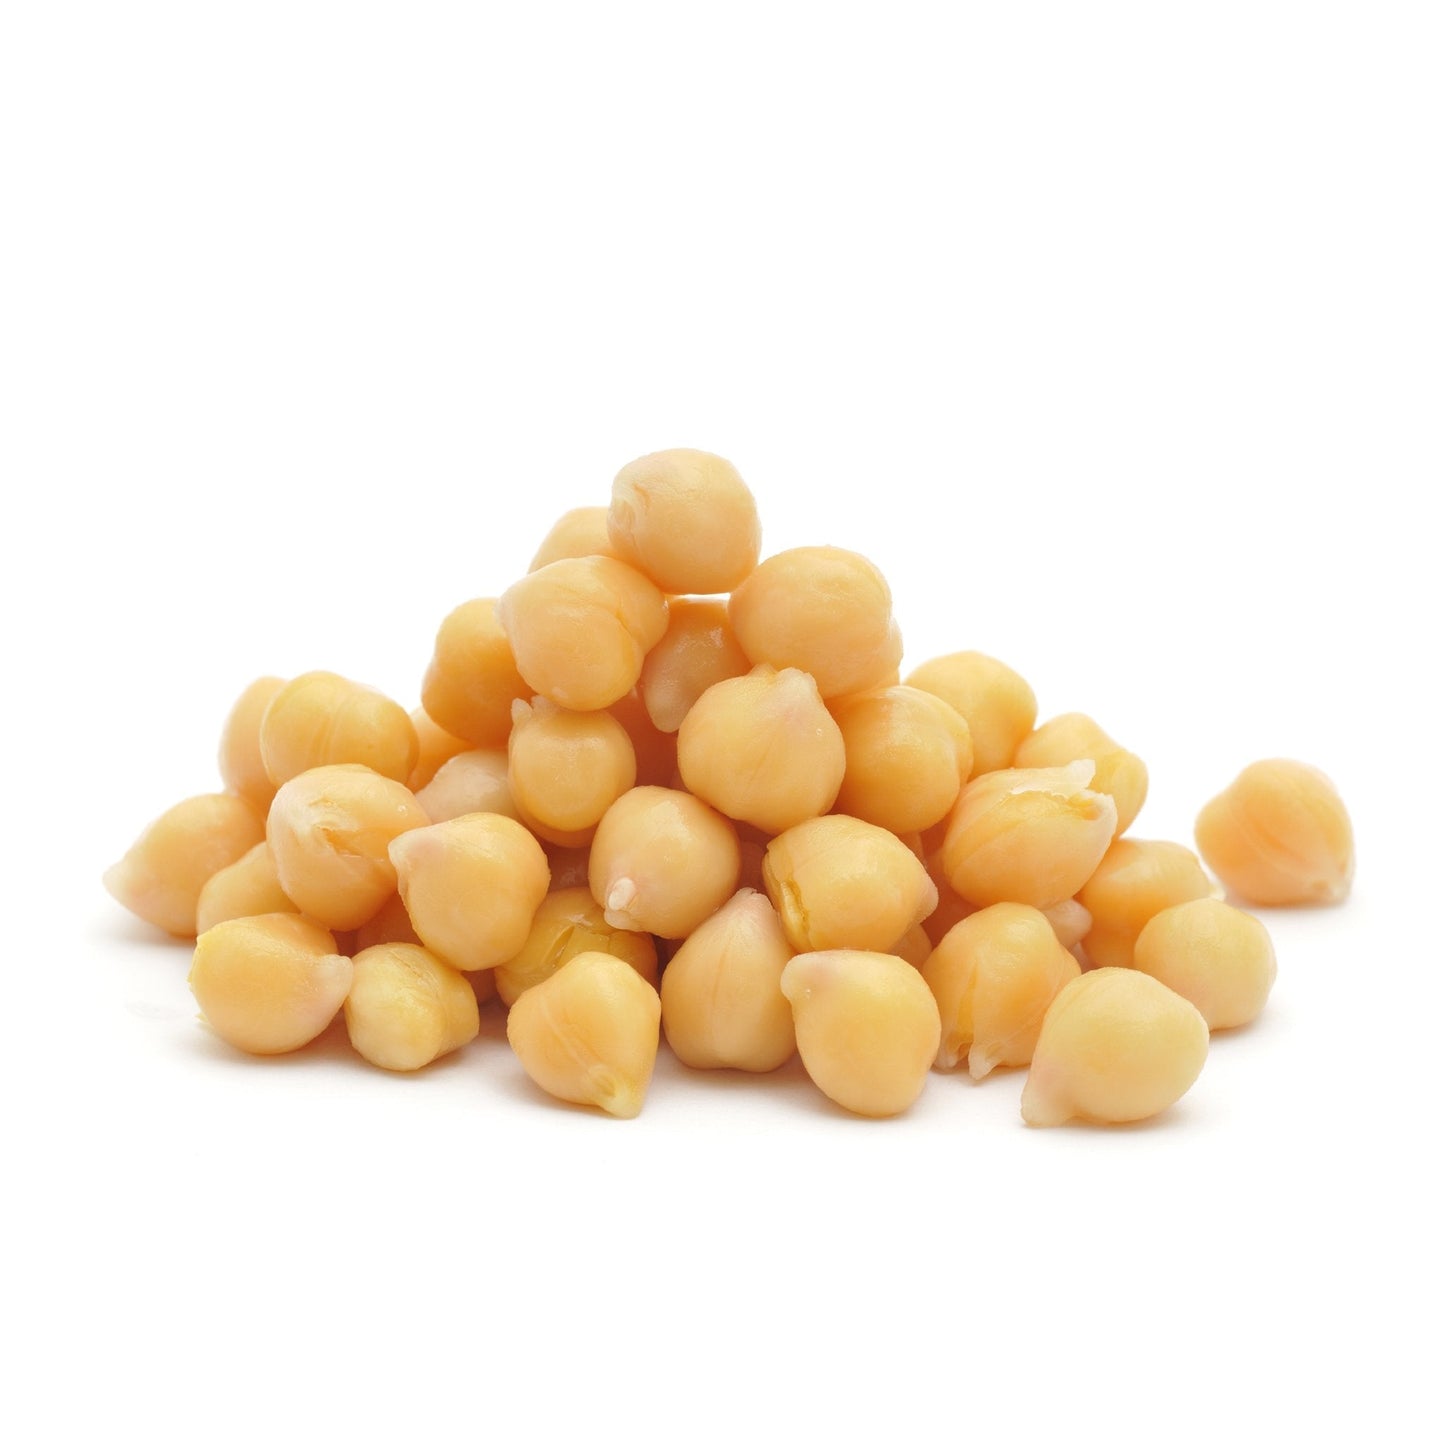 Garbanzo Beans - Chickpeas (Dry)